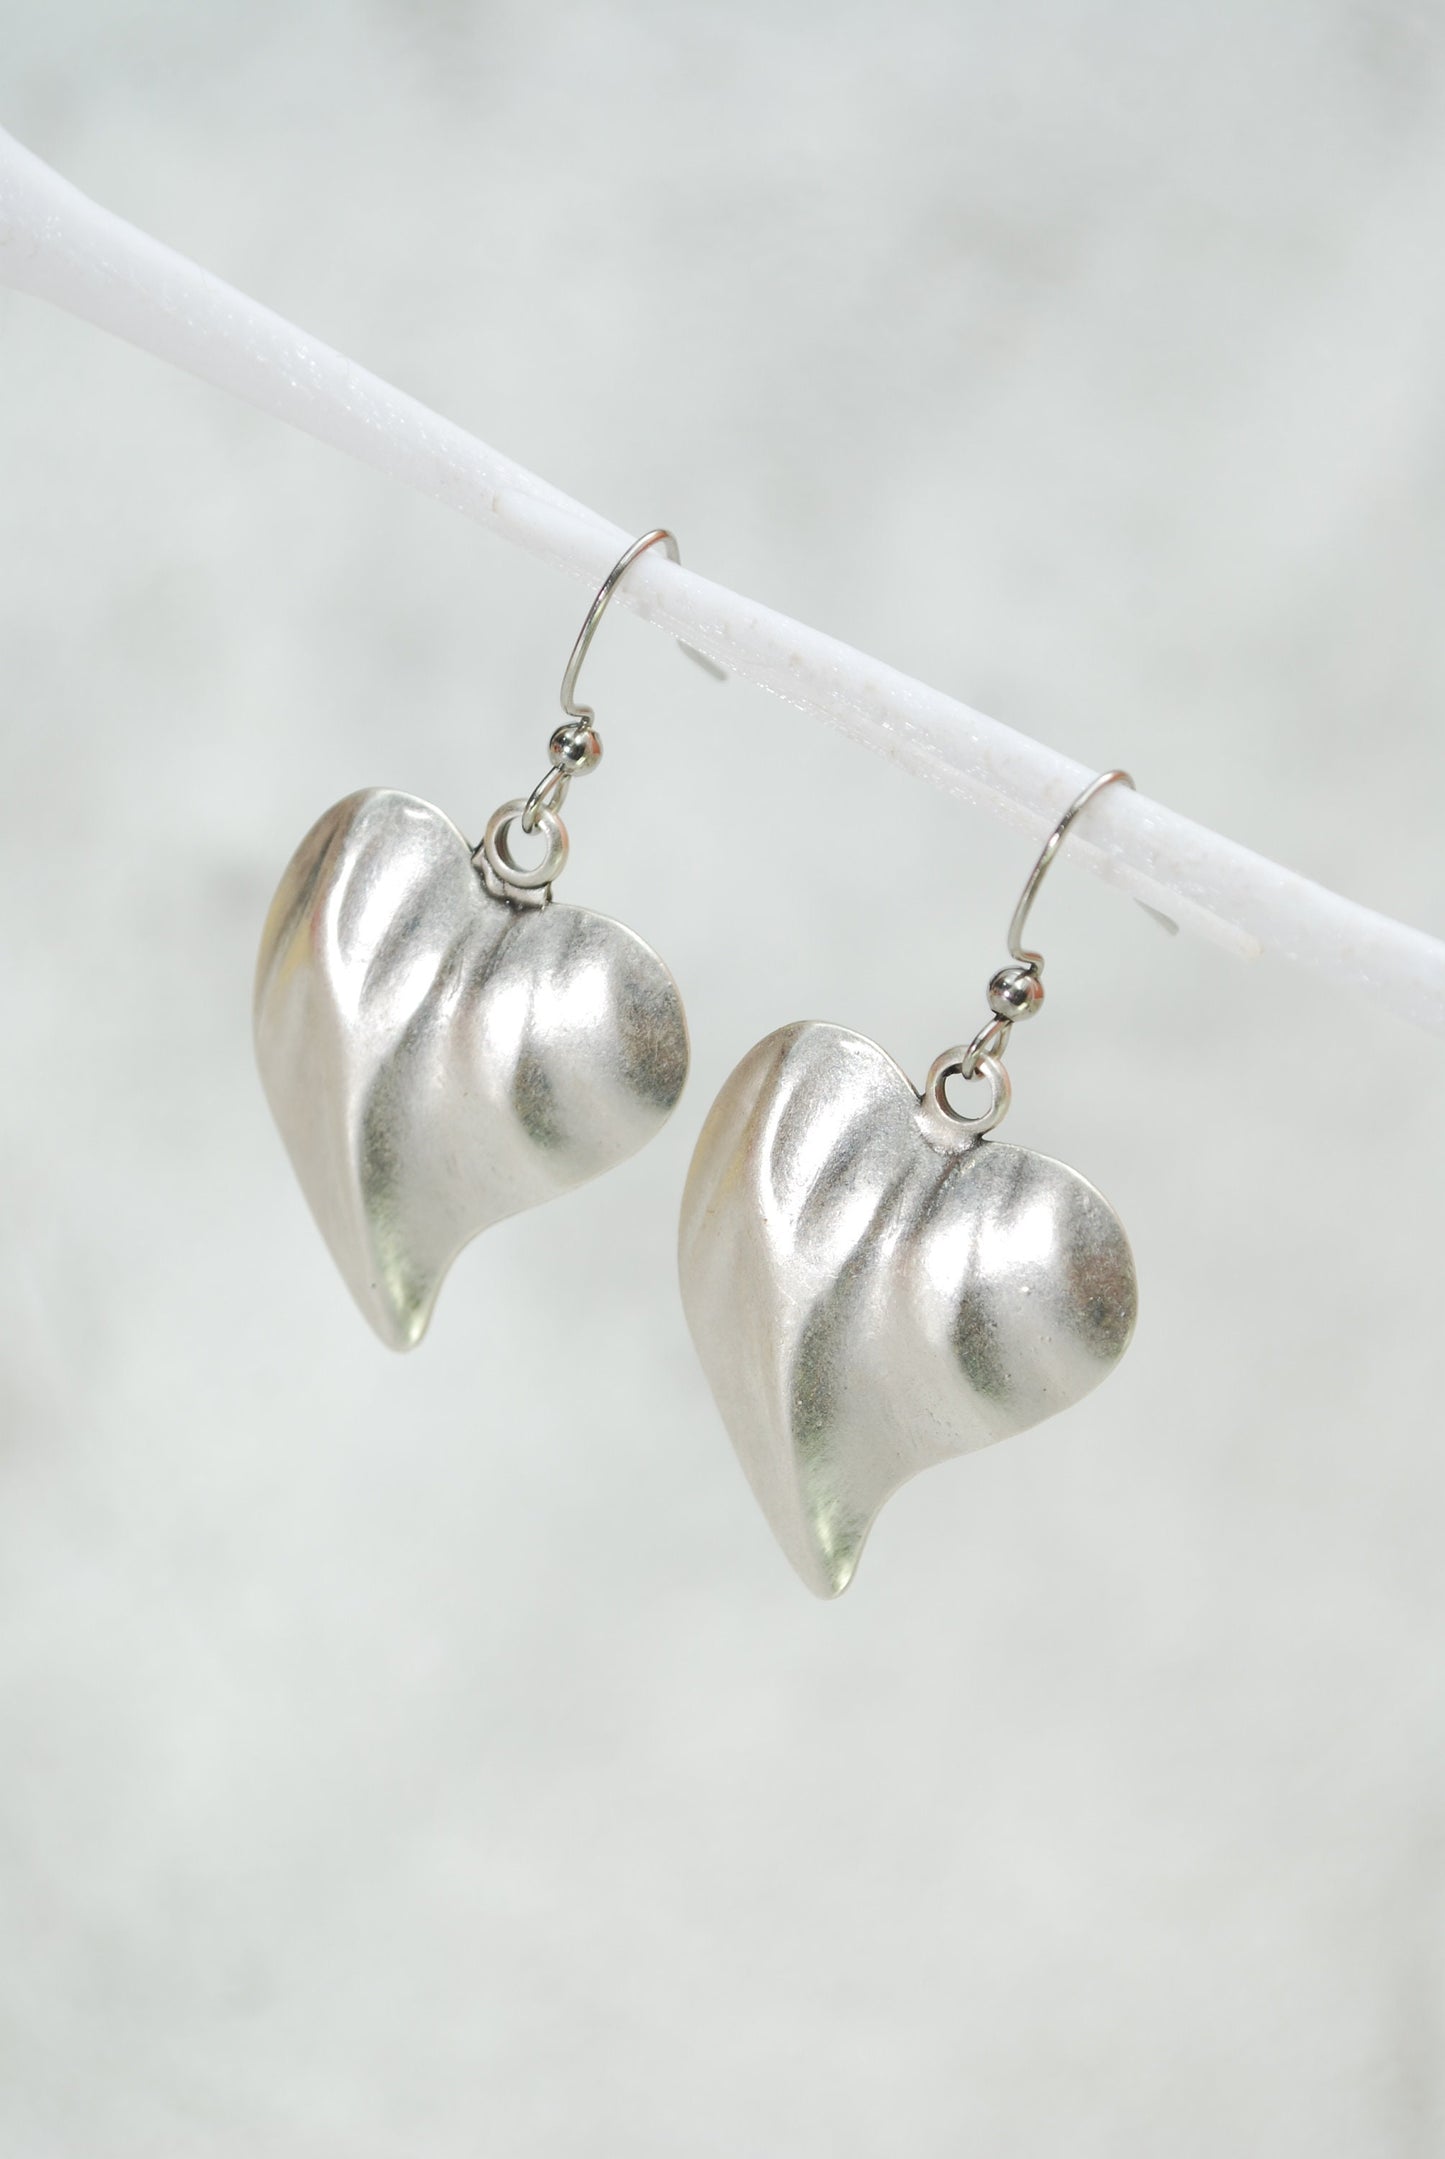 Big  heart shape earrings, antigue silver earrings, boho style, tribal art earrings, handmade 4.5cm 1.8"